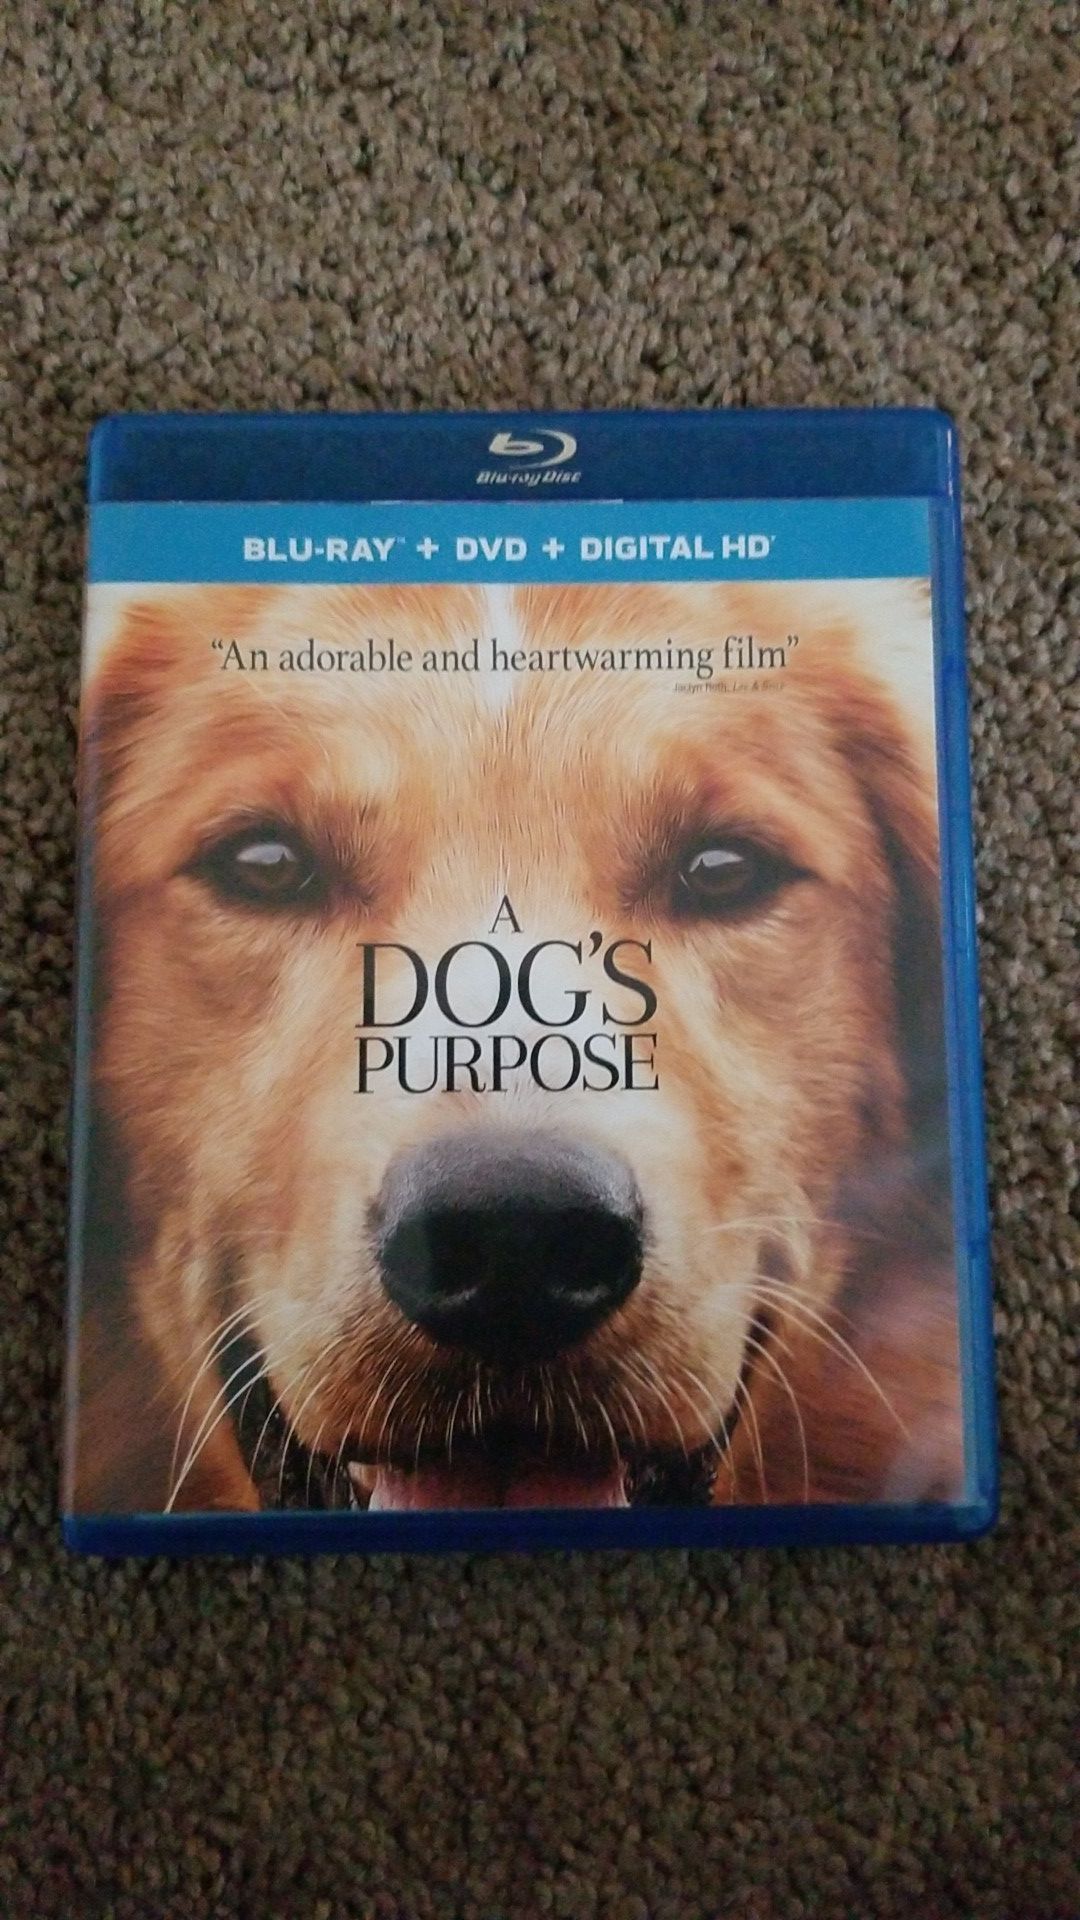 A DOGS PURPOSE